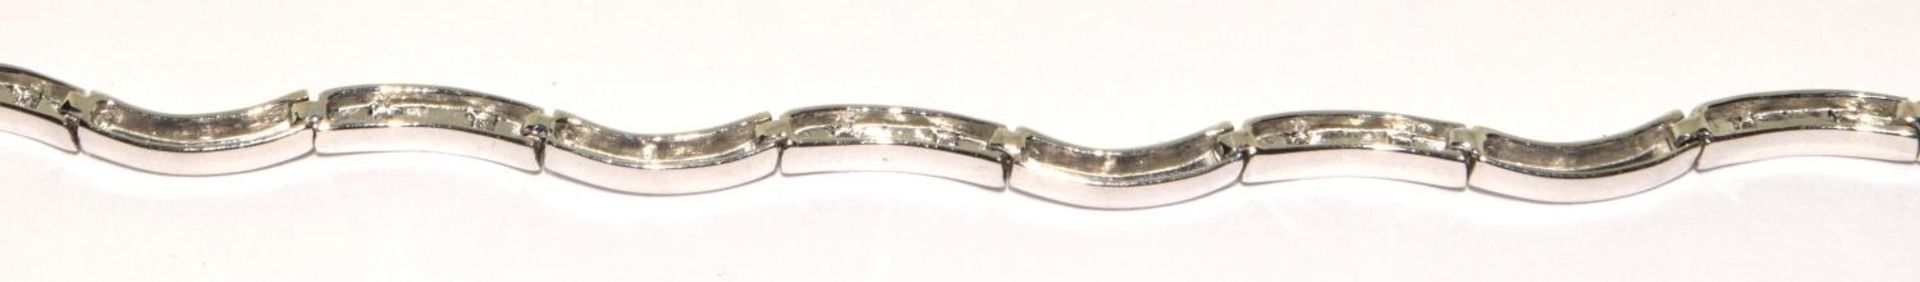 Diamond 9ct white gold 7g 7.5inch bracelet - Image 5 of 5